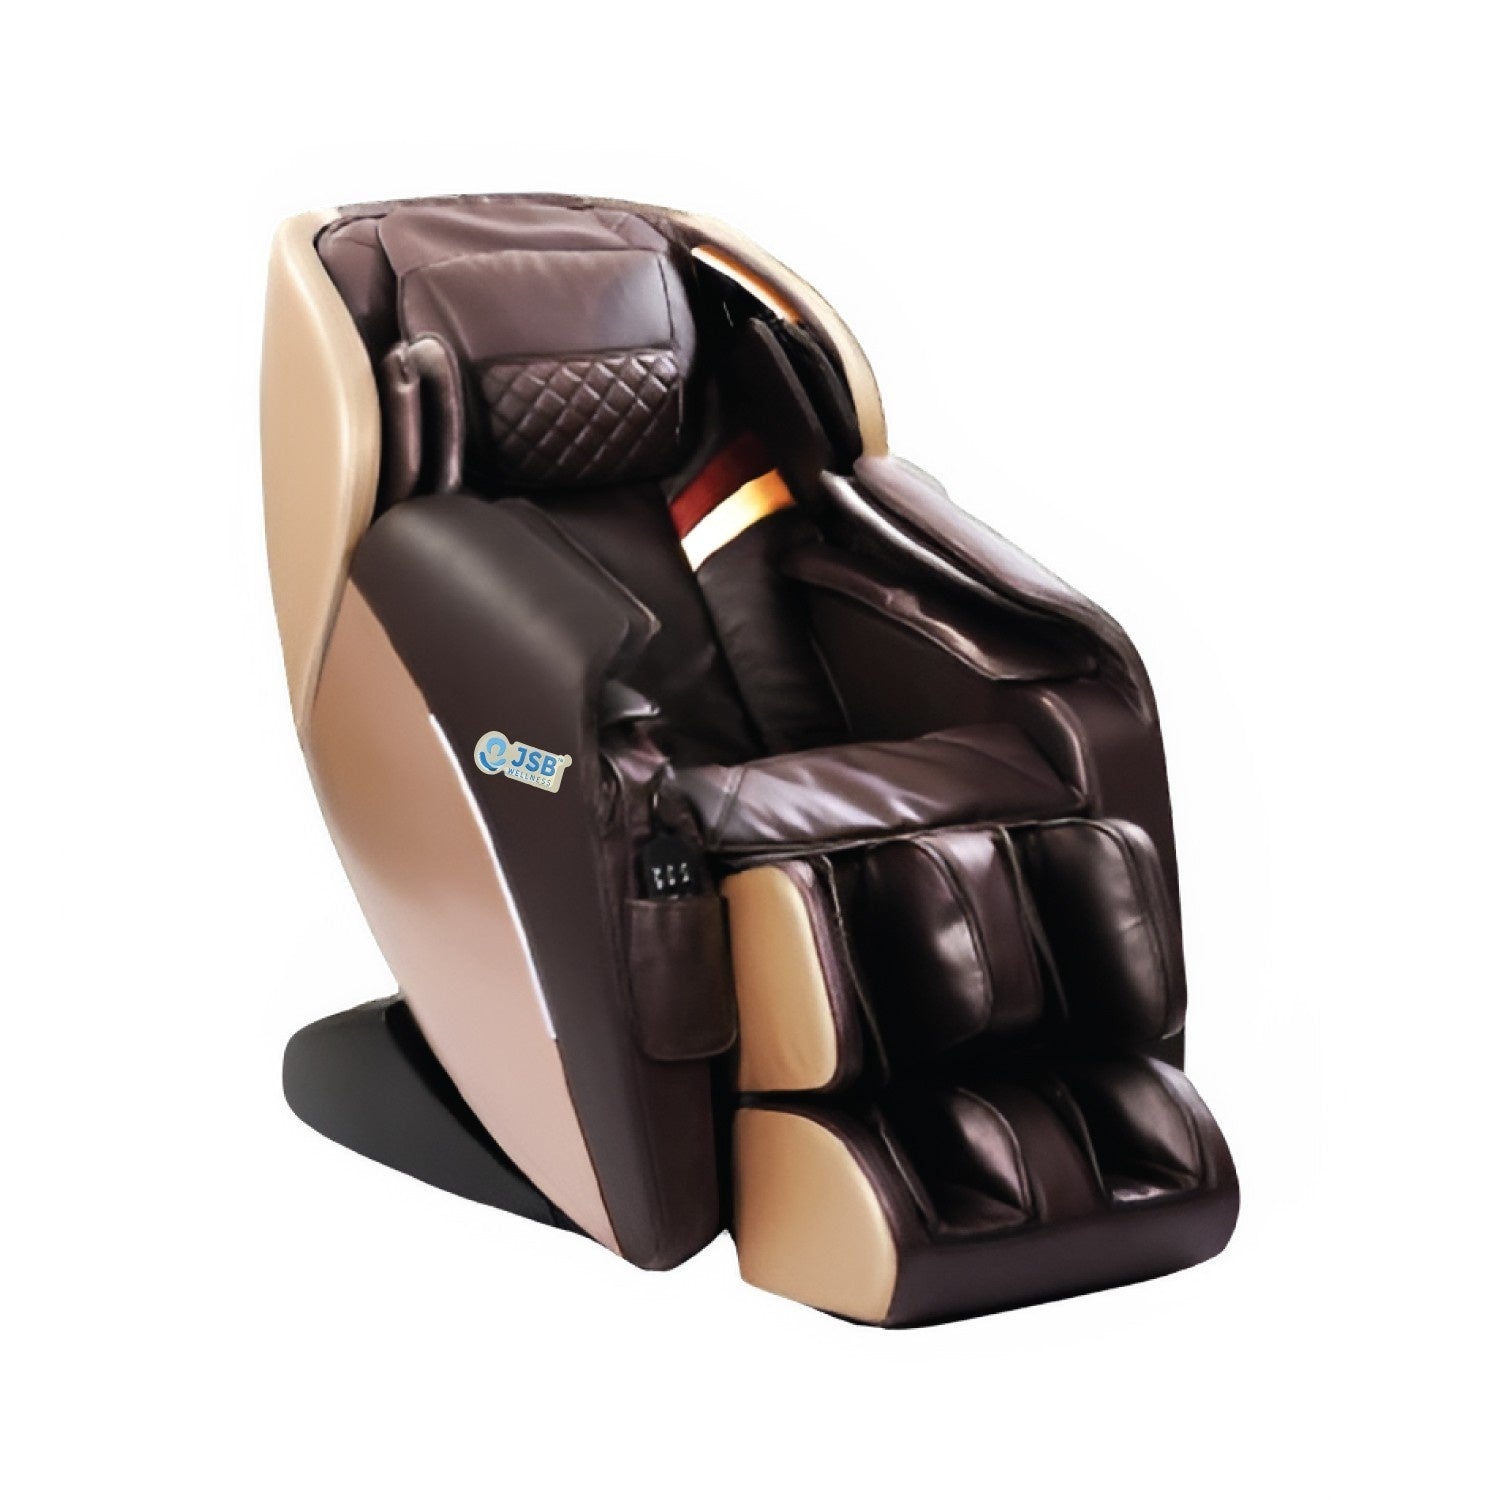 Full Body Massage Chair JSB MZ19 3D Zero Gravity